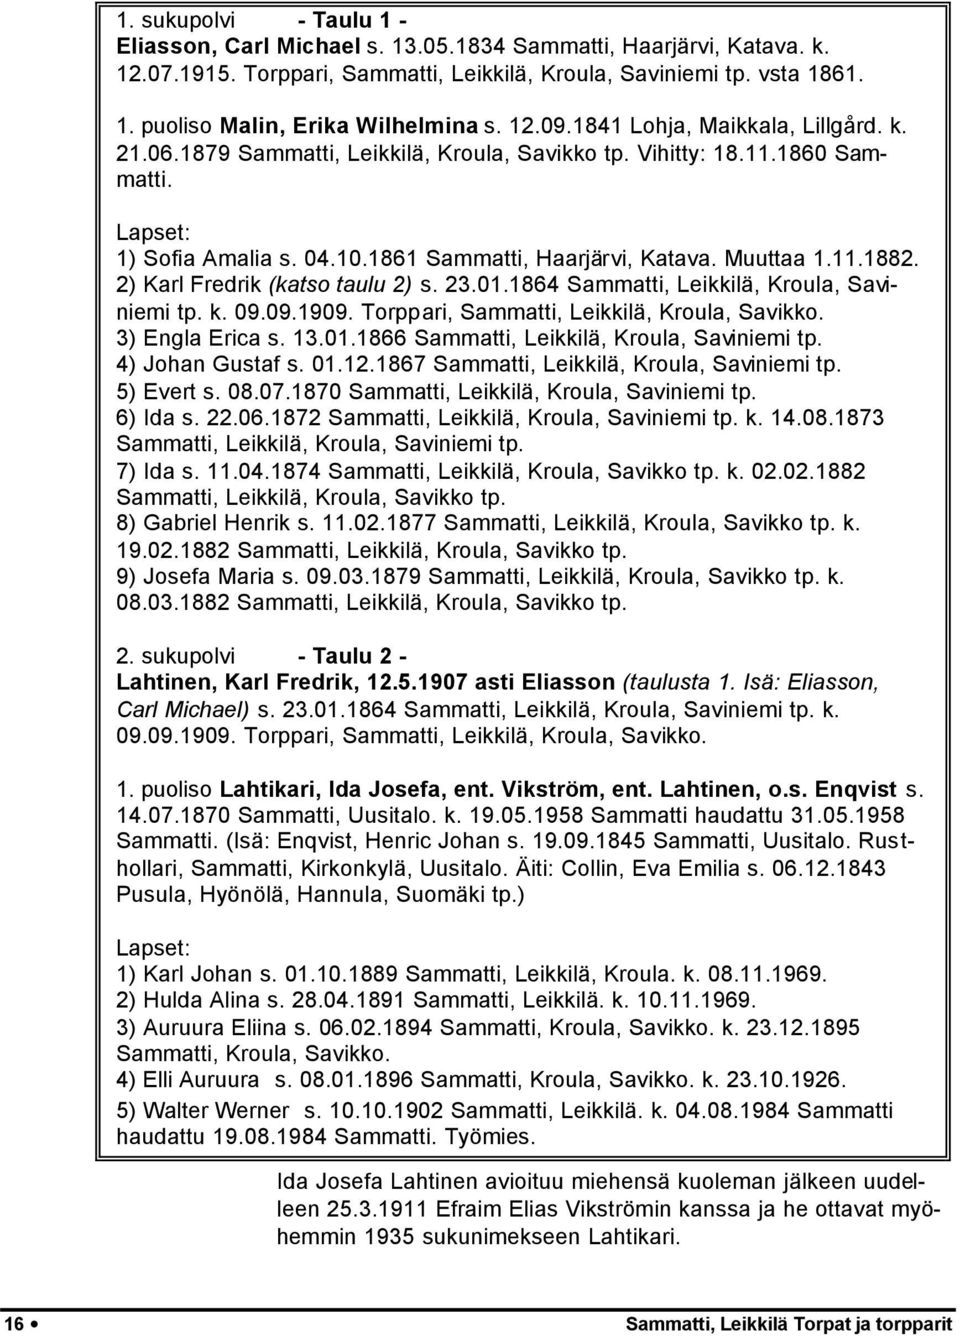 2) Karl Fredrik (katso taulu 2) s. 23.01.1864 Sammatti, Leikkilä, Kroula, Saviniemi tp. k. 09.09.1909. Torppari, Sammatti, Leikkilä, Kroula, Savikko. 3) Engla Erica s. 13.01.1866 Sammatti, Leikkilä, Kroula, Saviniemi tp.